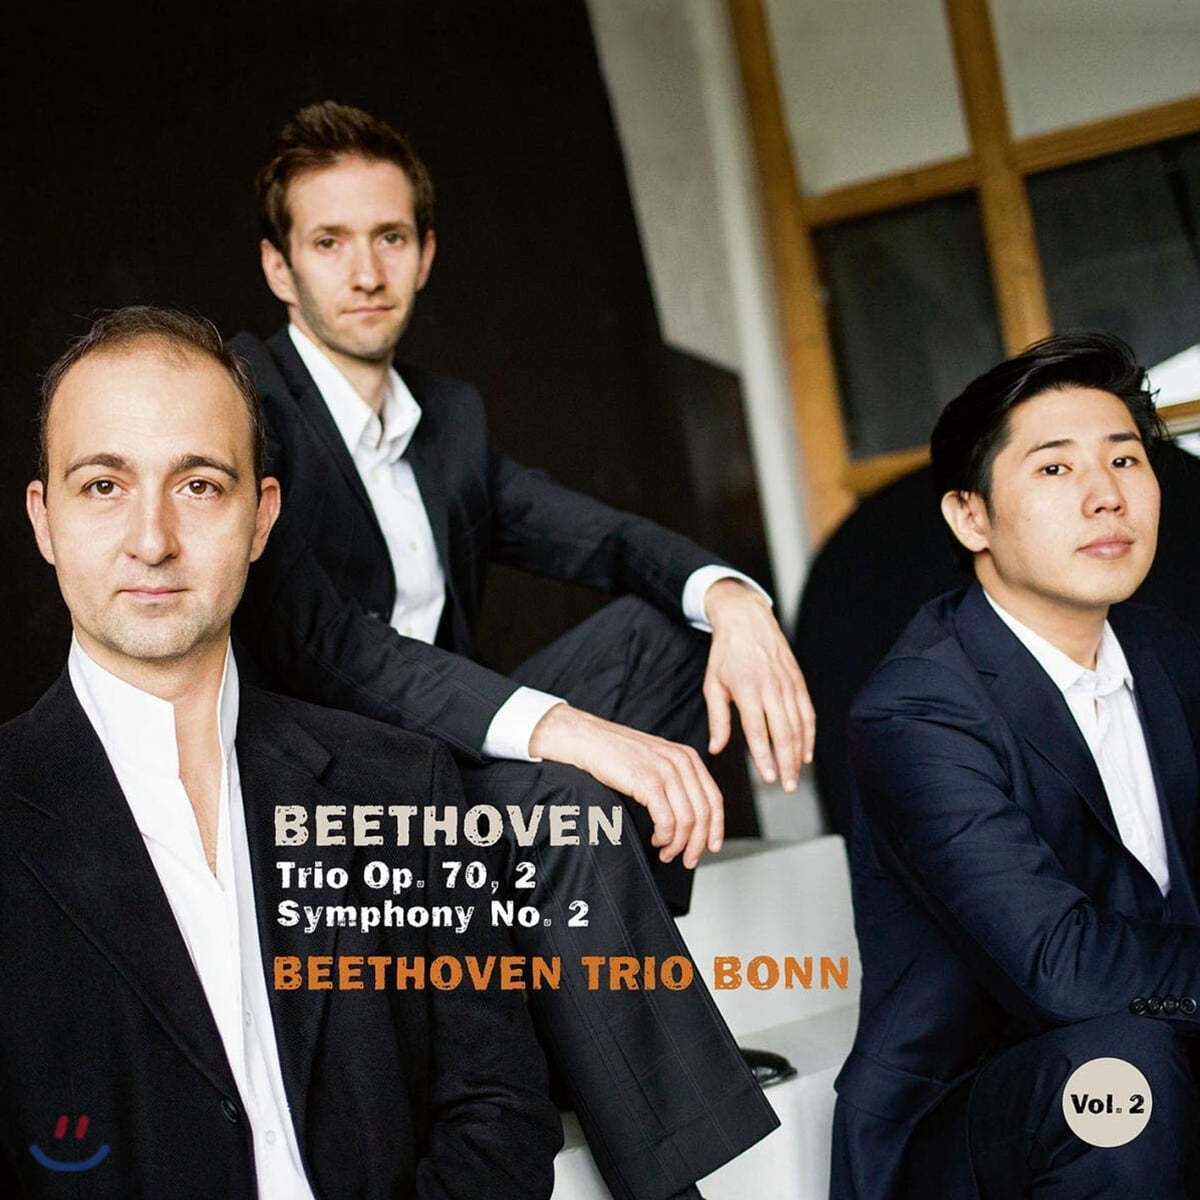 Beethoven Trio Bonn 베토벤: 피아노 삼중주 6번, 교향곡 2번 [피아노 3중주 버전] - 베토벤 트리오 본